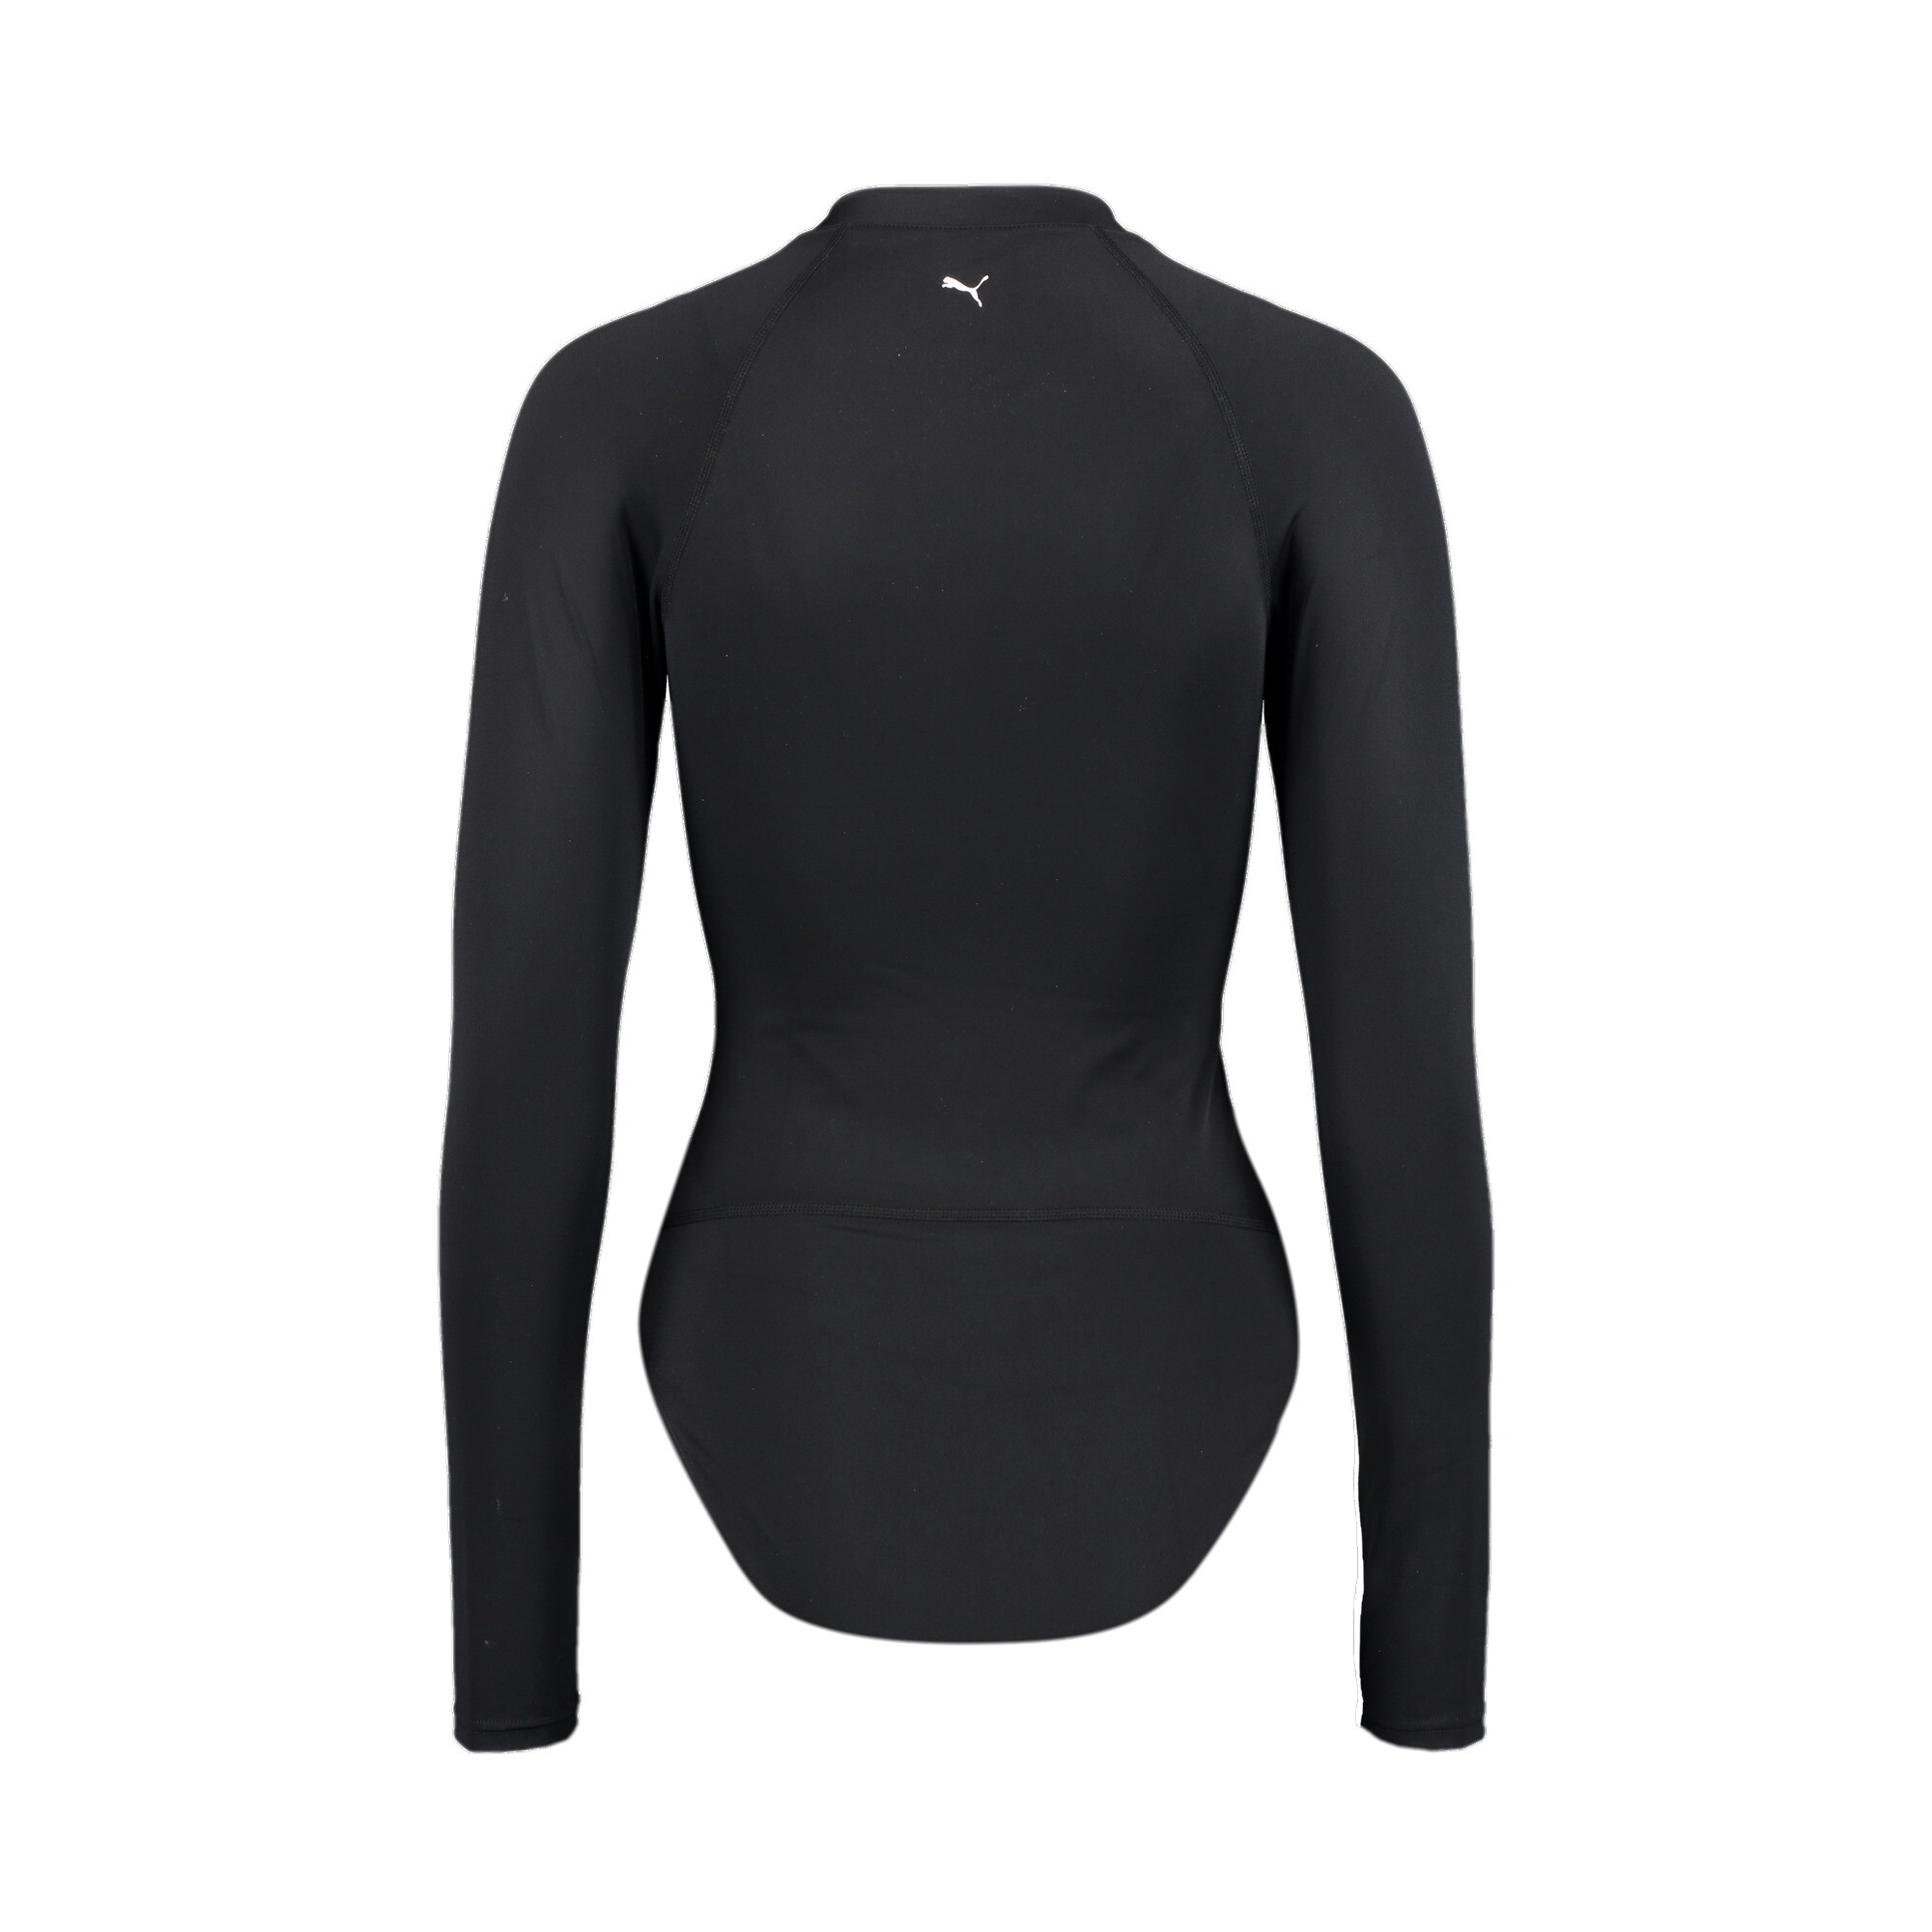 Women's PUMA Swim Long Sleeve Surf Suit In Black, Size Large